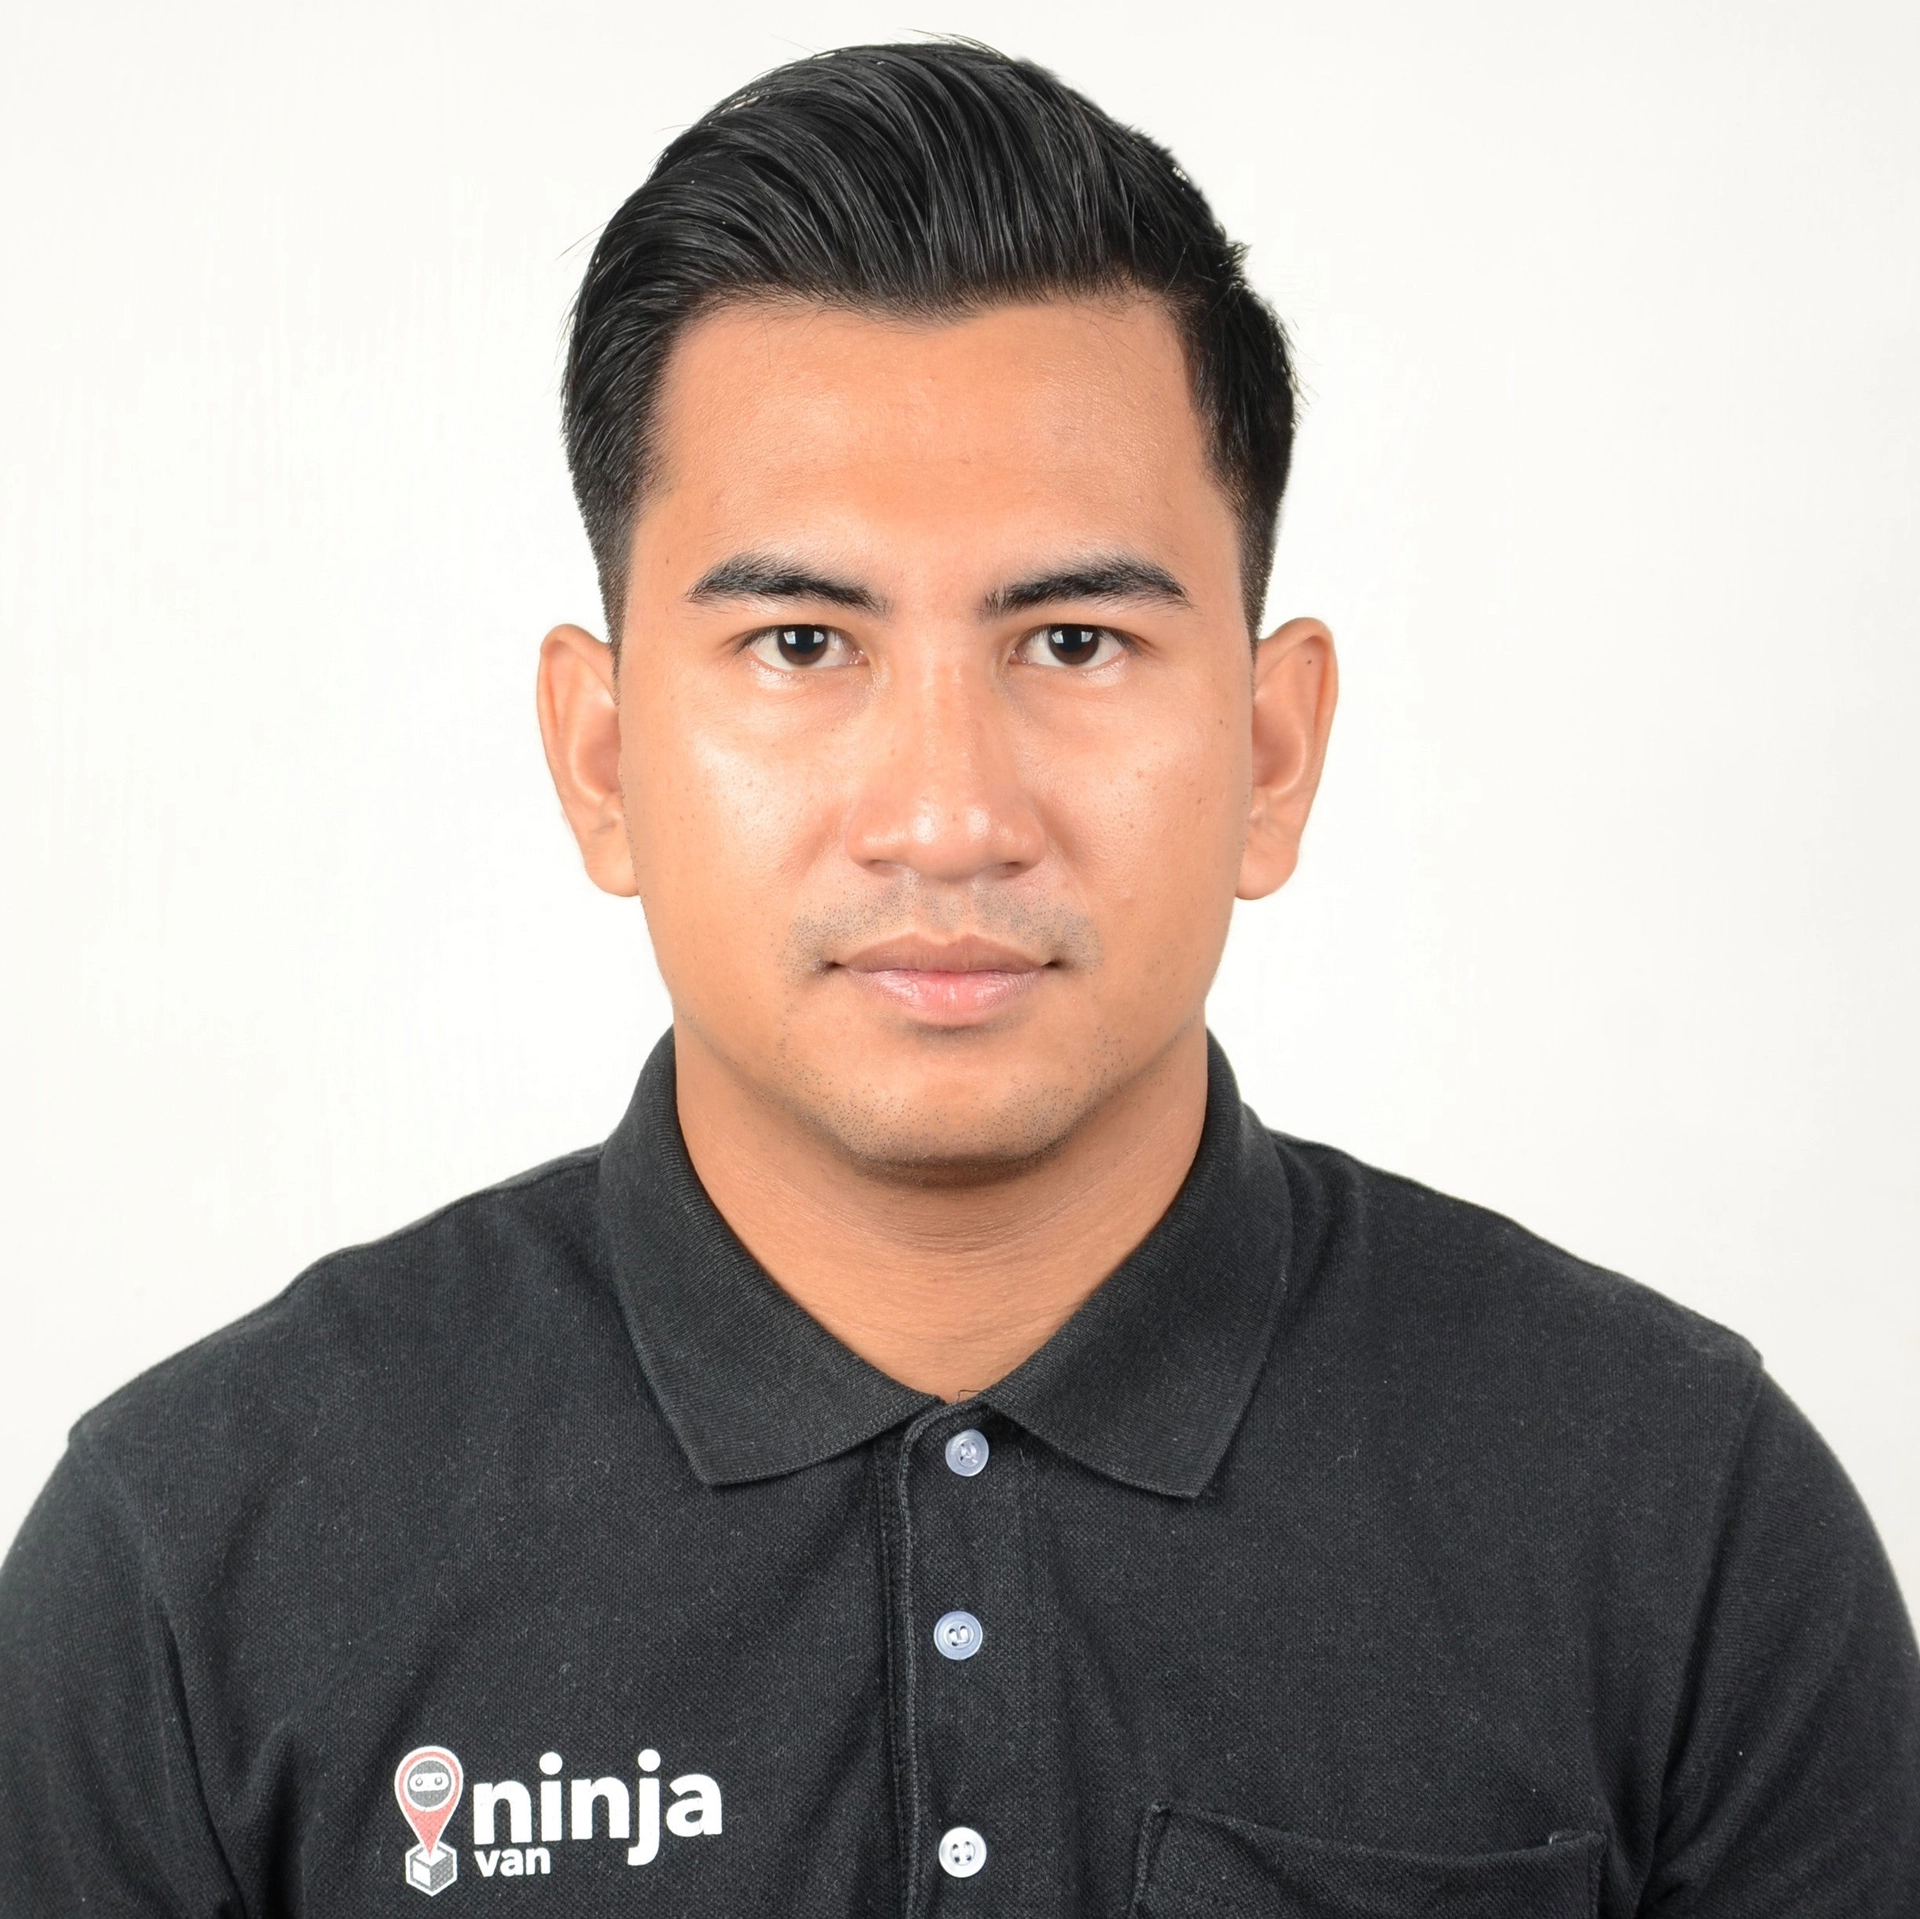 Ninja Xpress Indonesia fleet operations staff testimonial